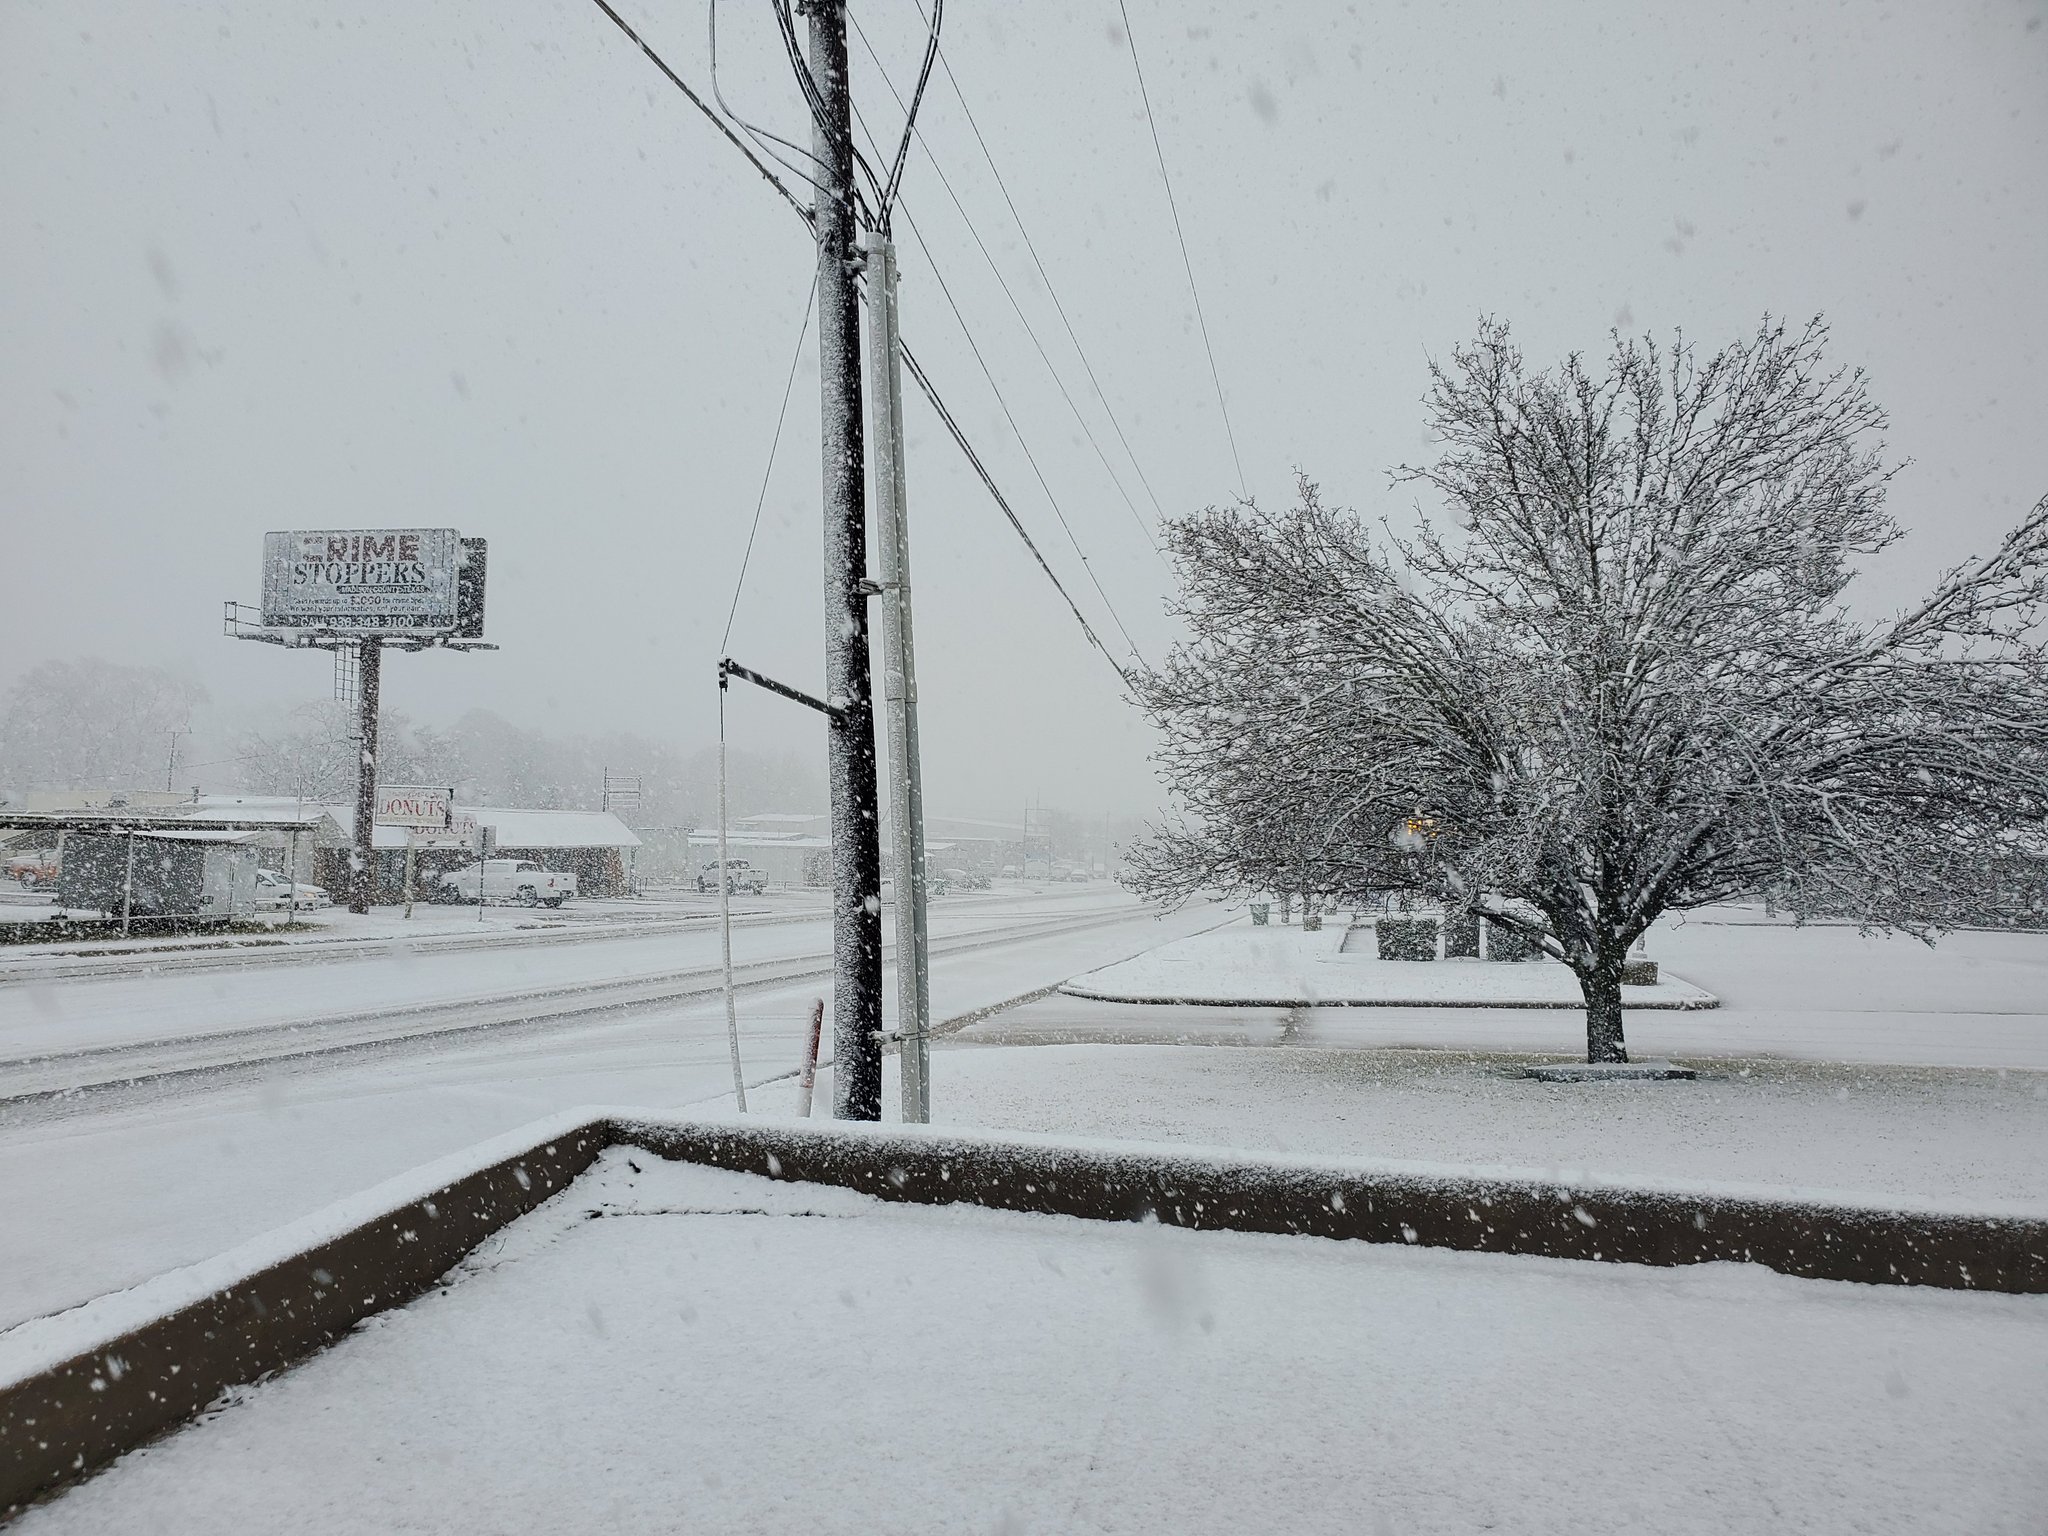 Snowy Scene in Madisonville (via Kyle Sikes on Twitter)